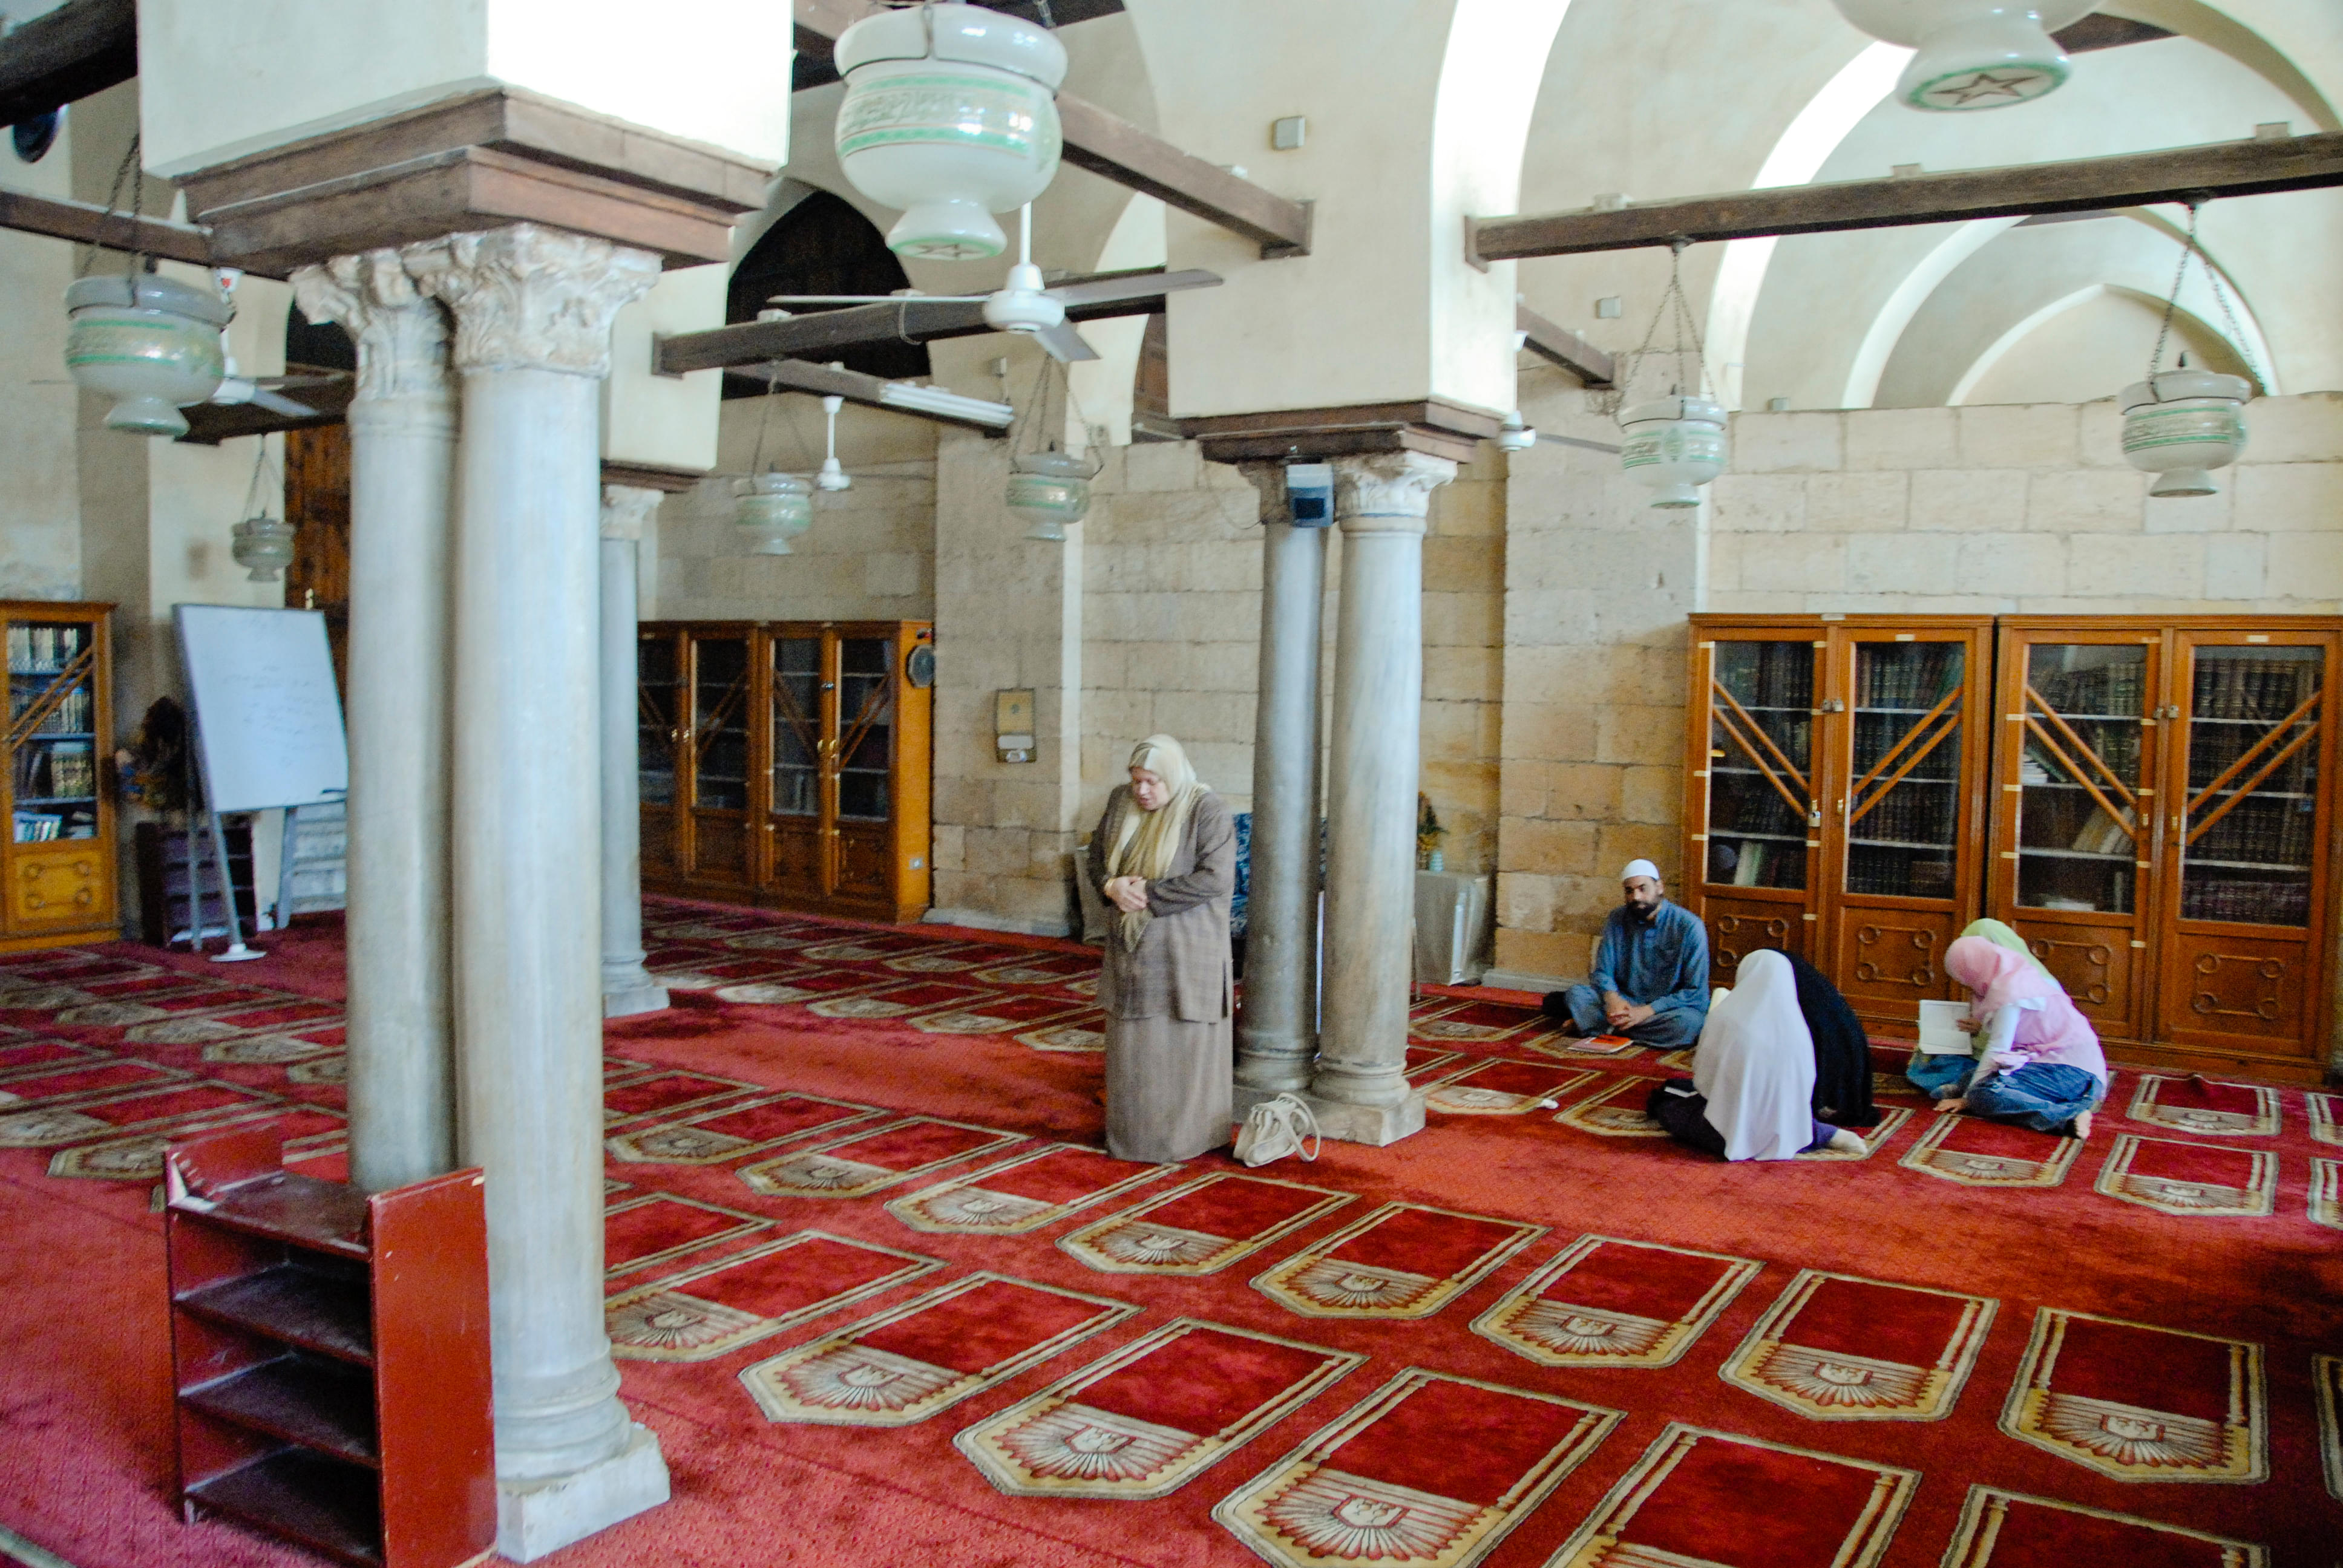 Main Prayer Hall